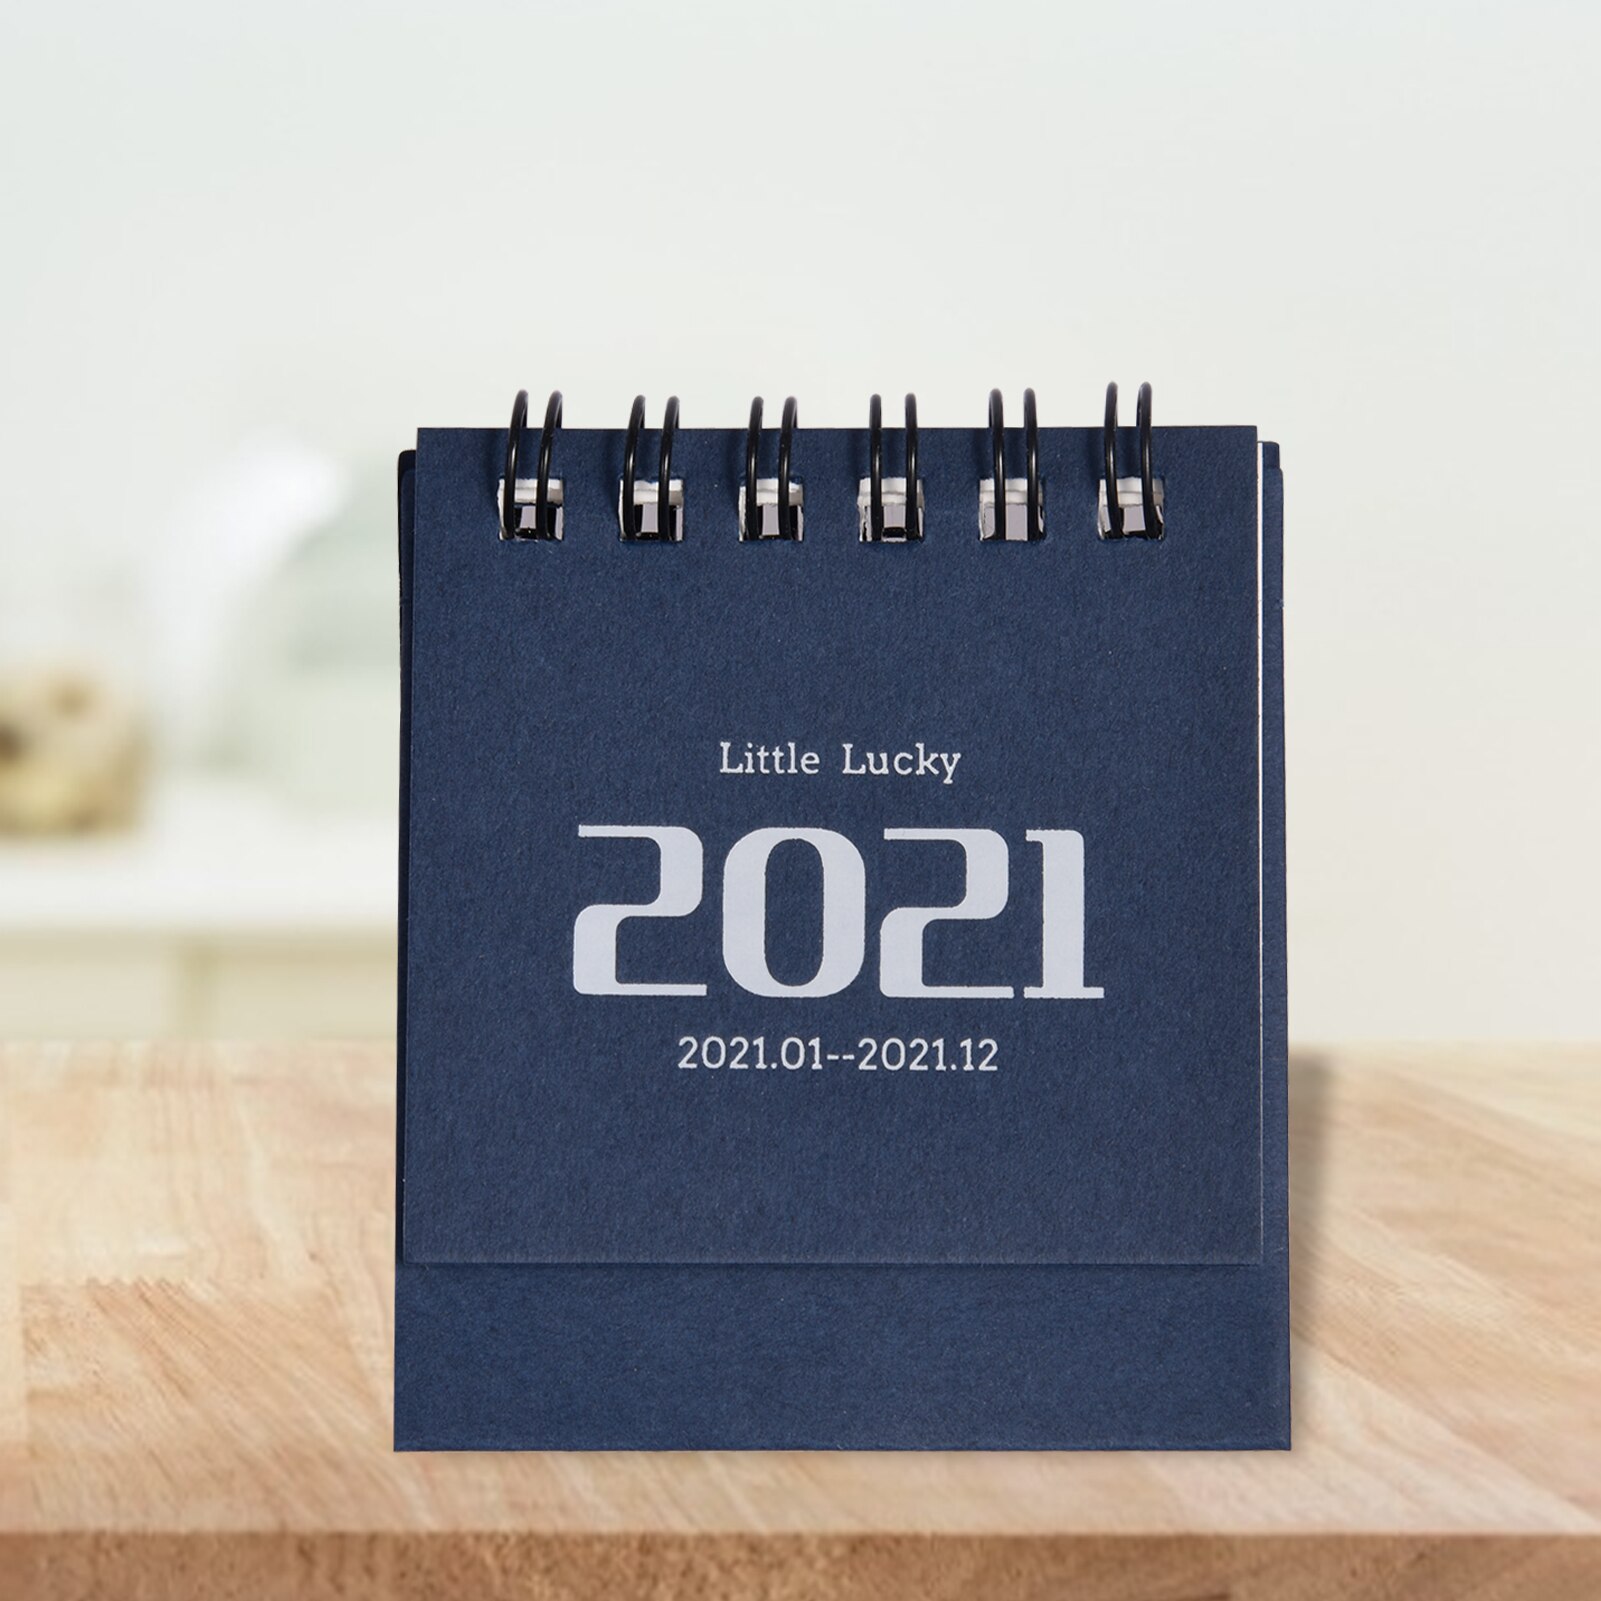 Mini Calendars Small Desk Calendar Convenient Daily Schedule Table Planner Yearly Organizer Office School Supplies: Blue